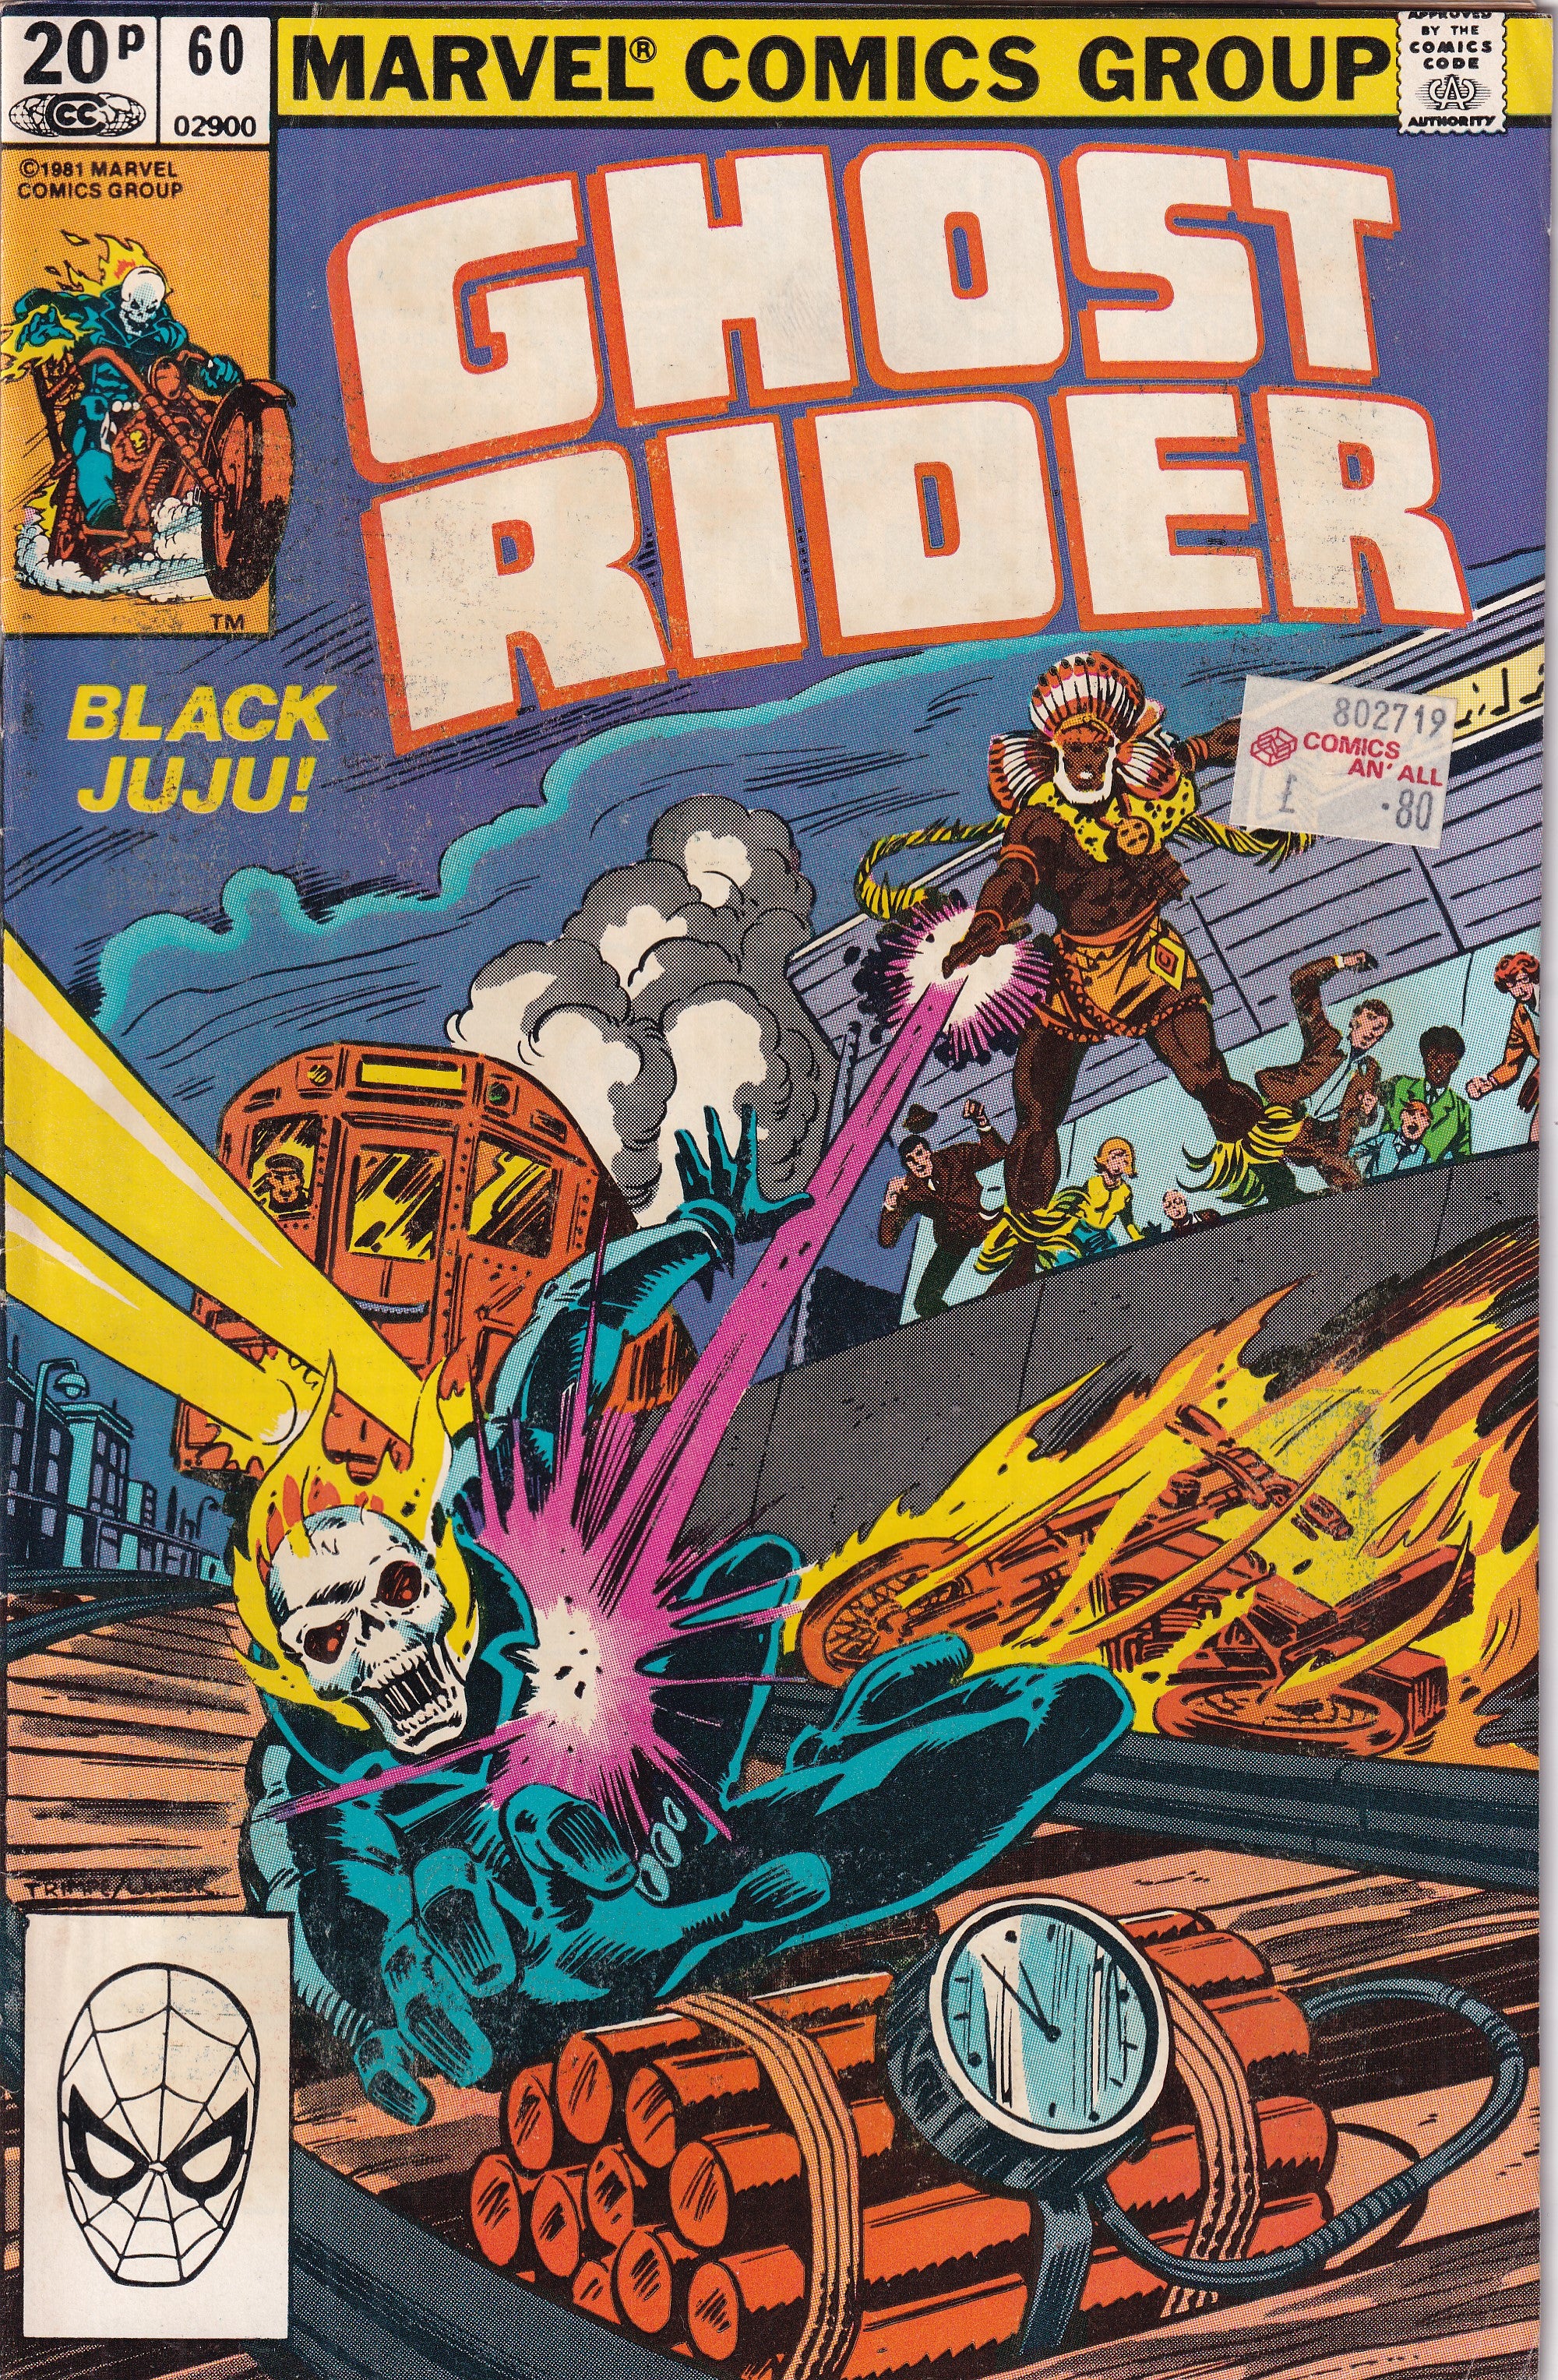 GHOST RIDER #60 - Slab City Comics 